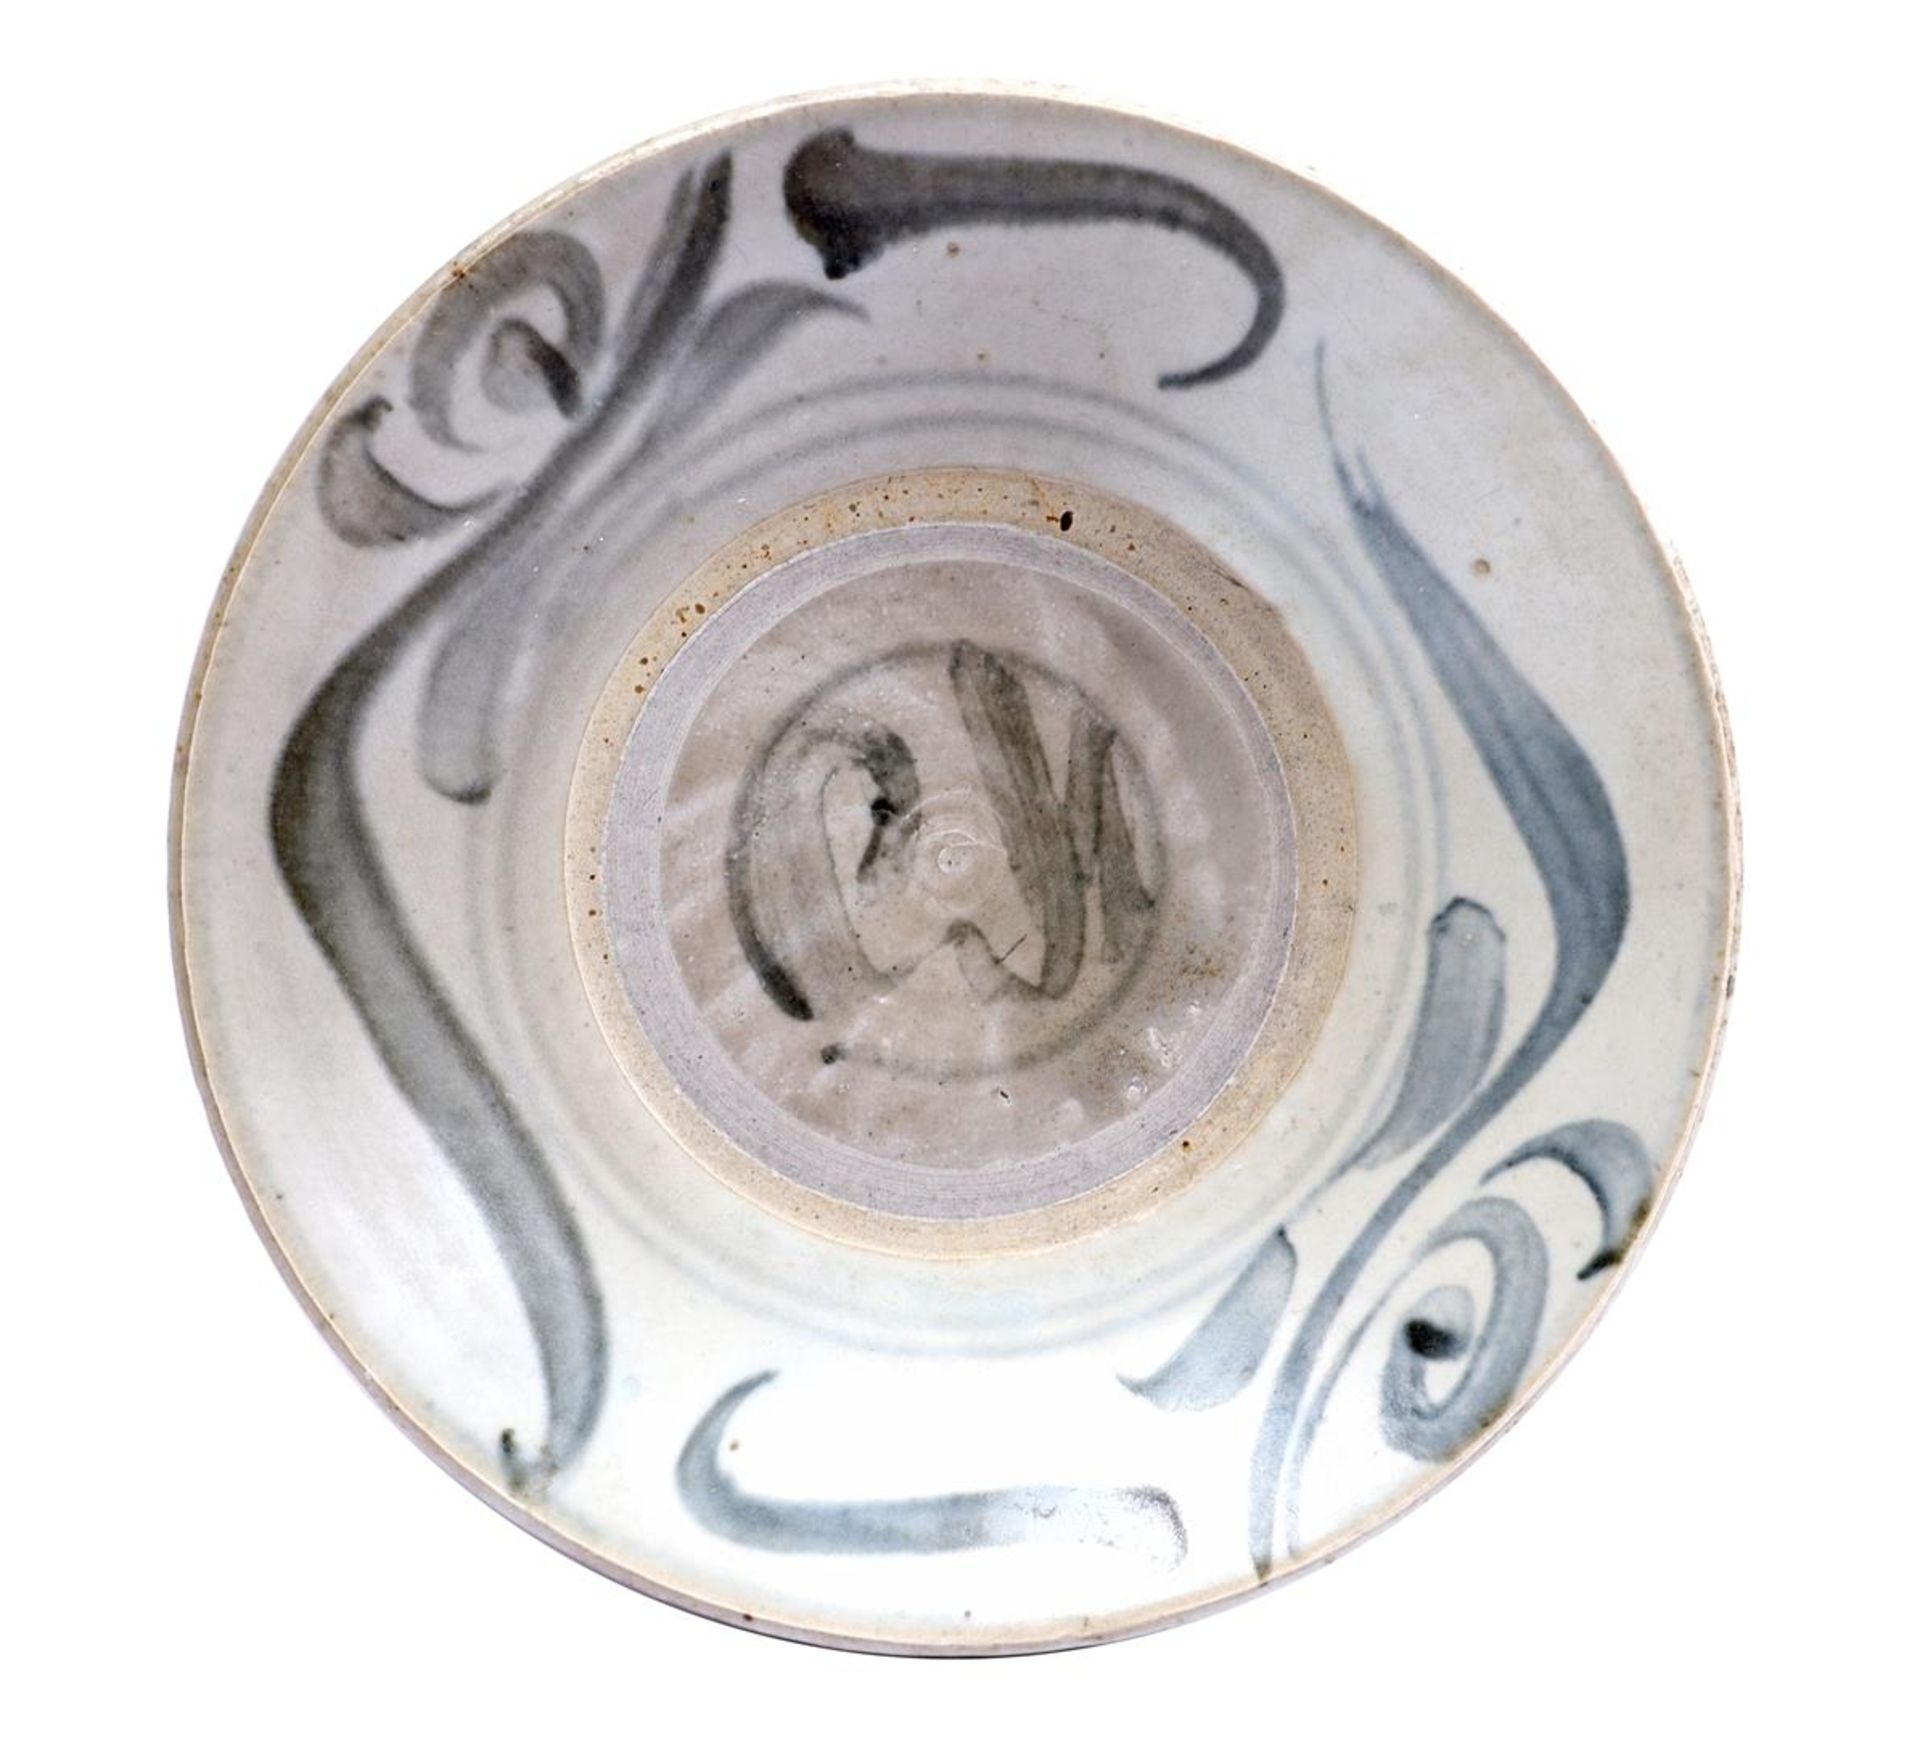 Swatow porcelain dish, ca. 1900